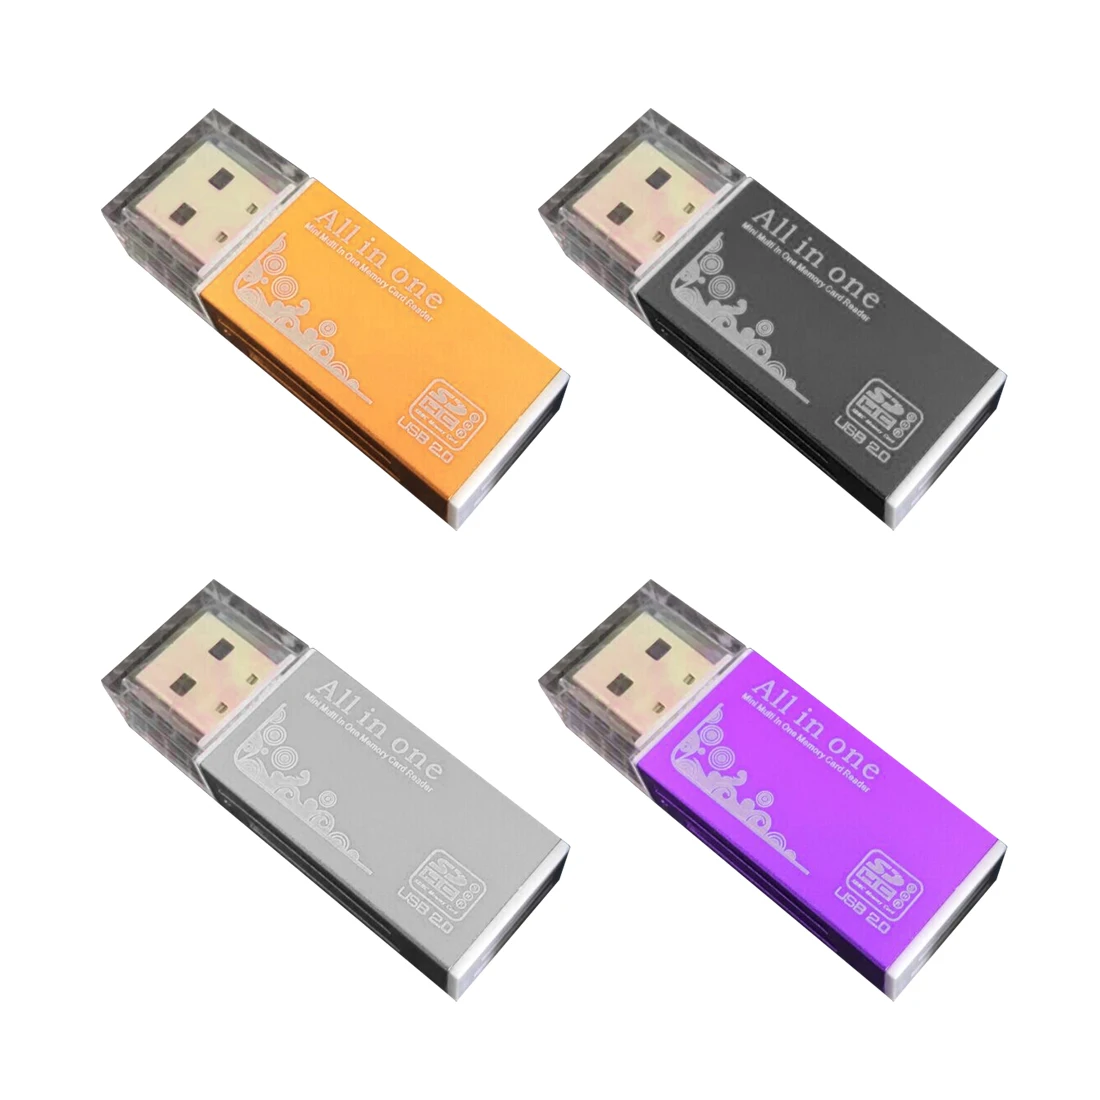 Noyokere хорошие продажи smart card reader Multi чтения карт памяти Memory Stick Pro Duo Micro для SD TF M2 MMC SDHC MS